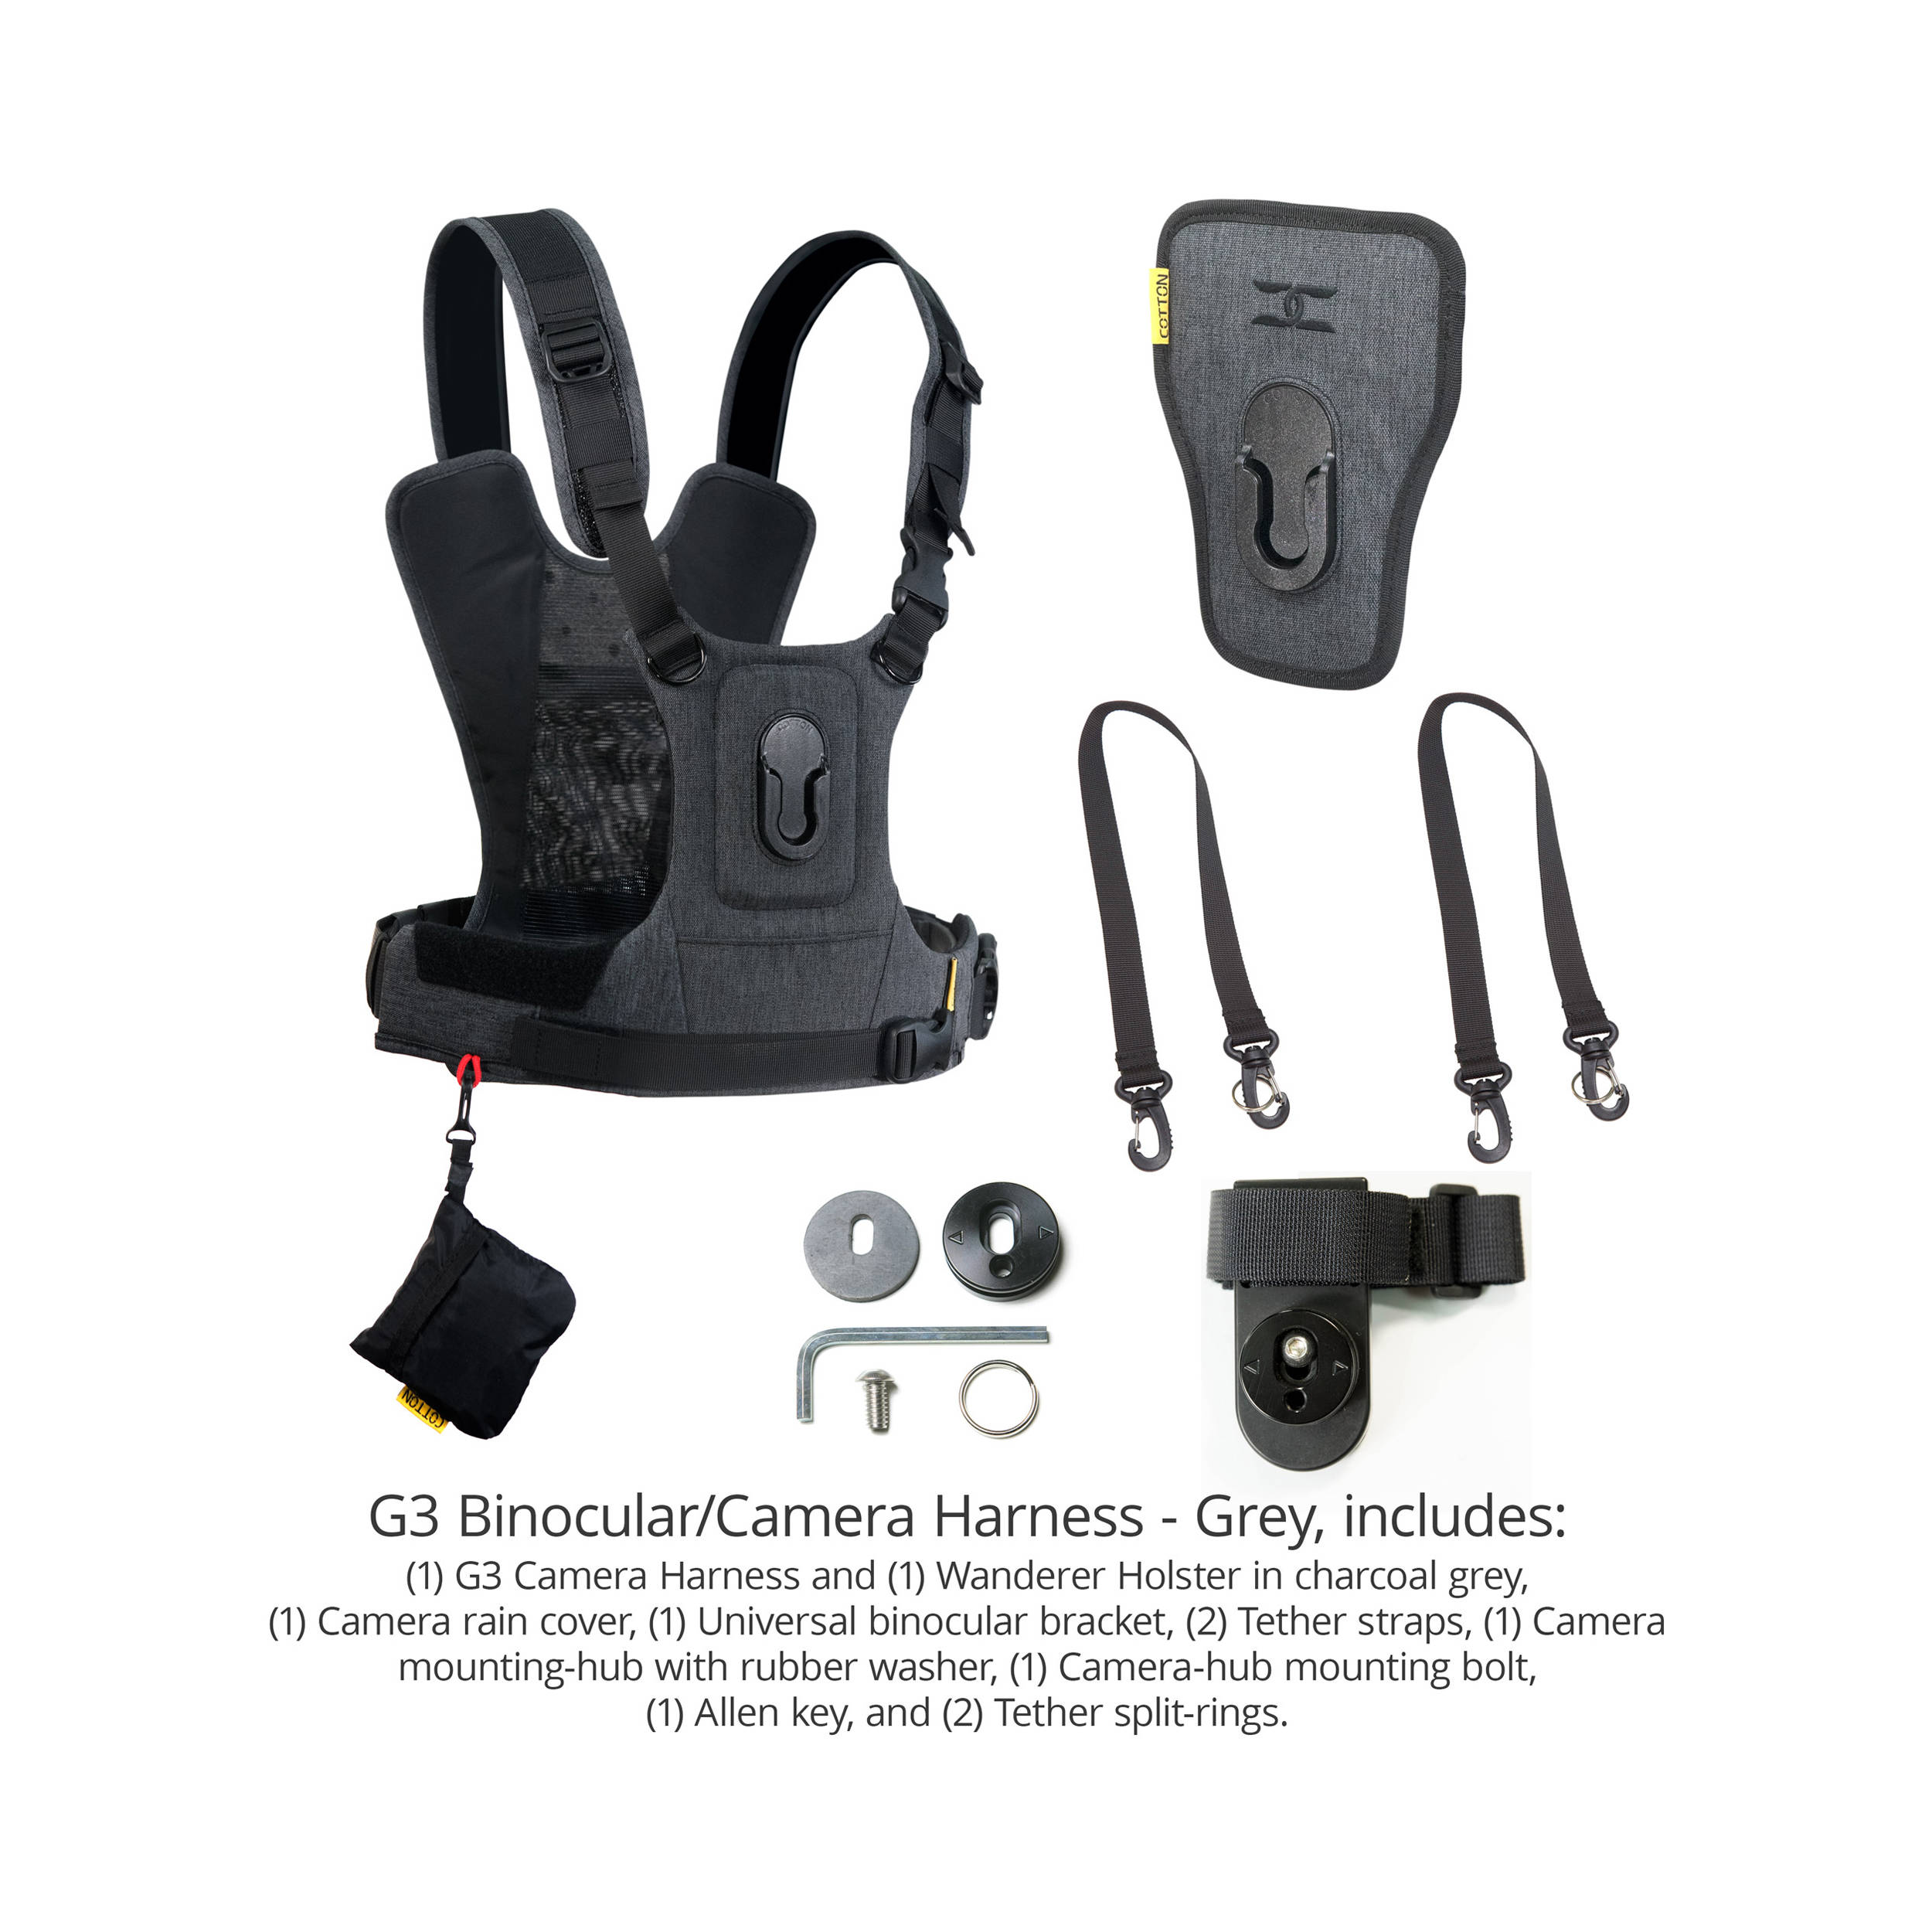 Cotton Carrier CCS G3 Binocular and Camera Harness